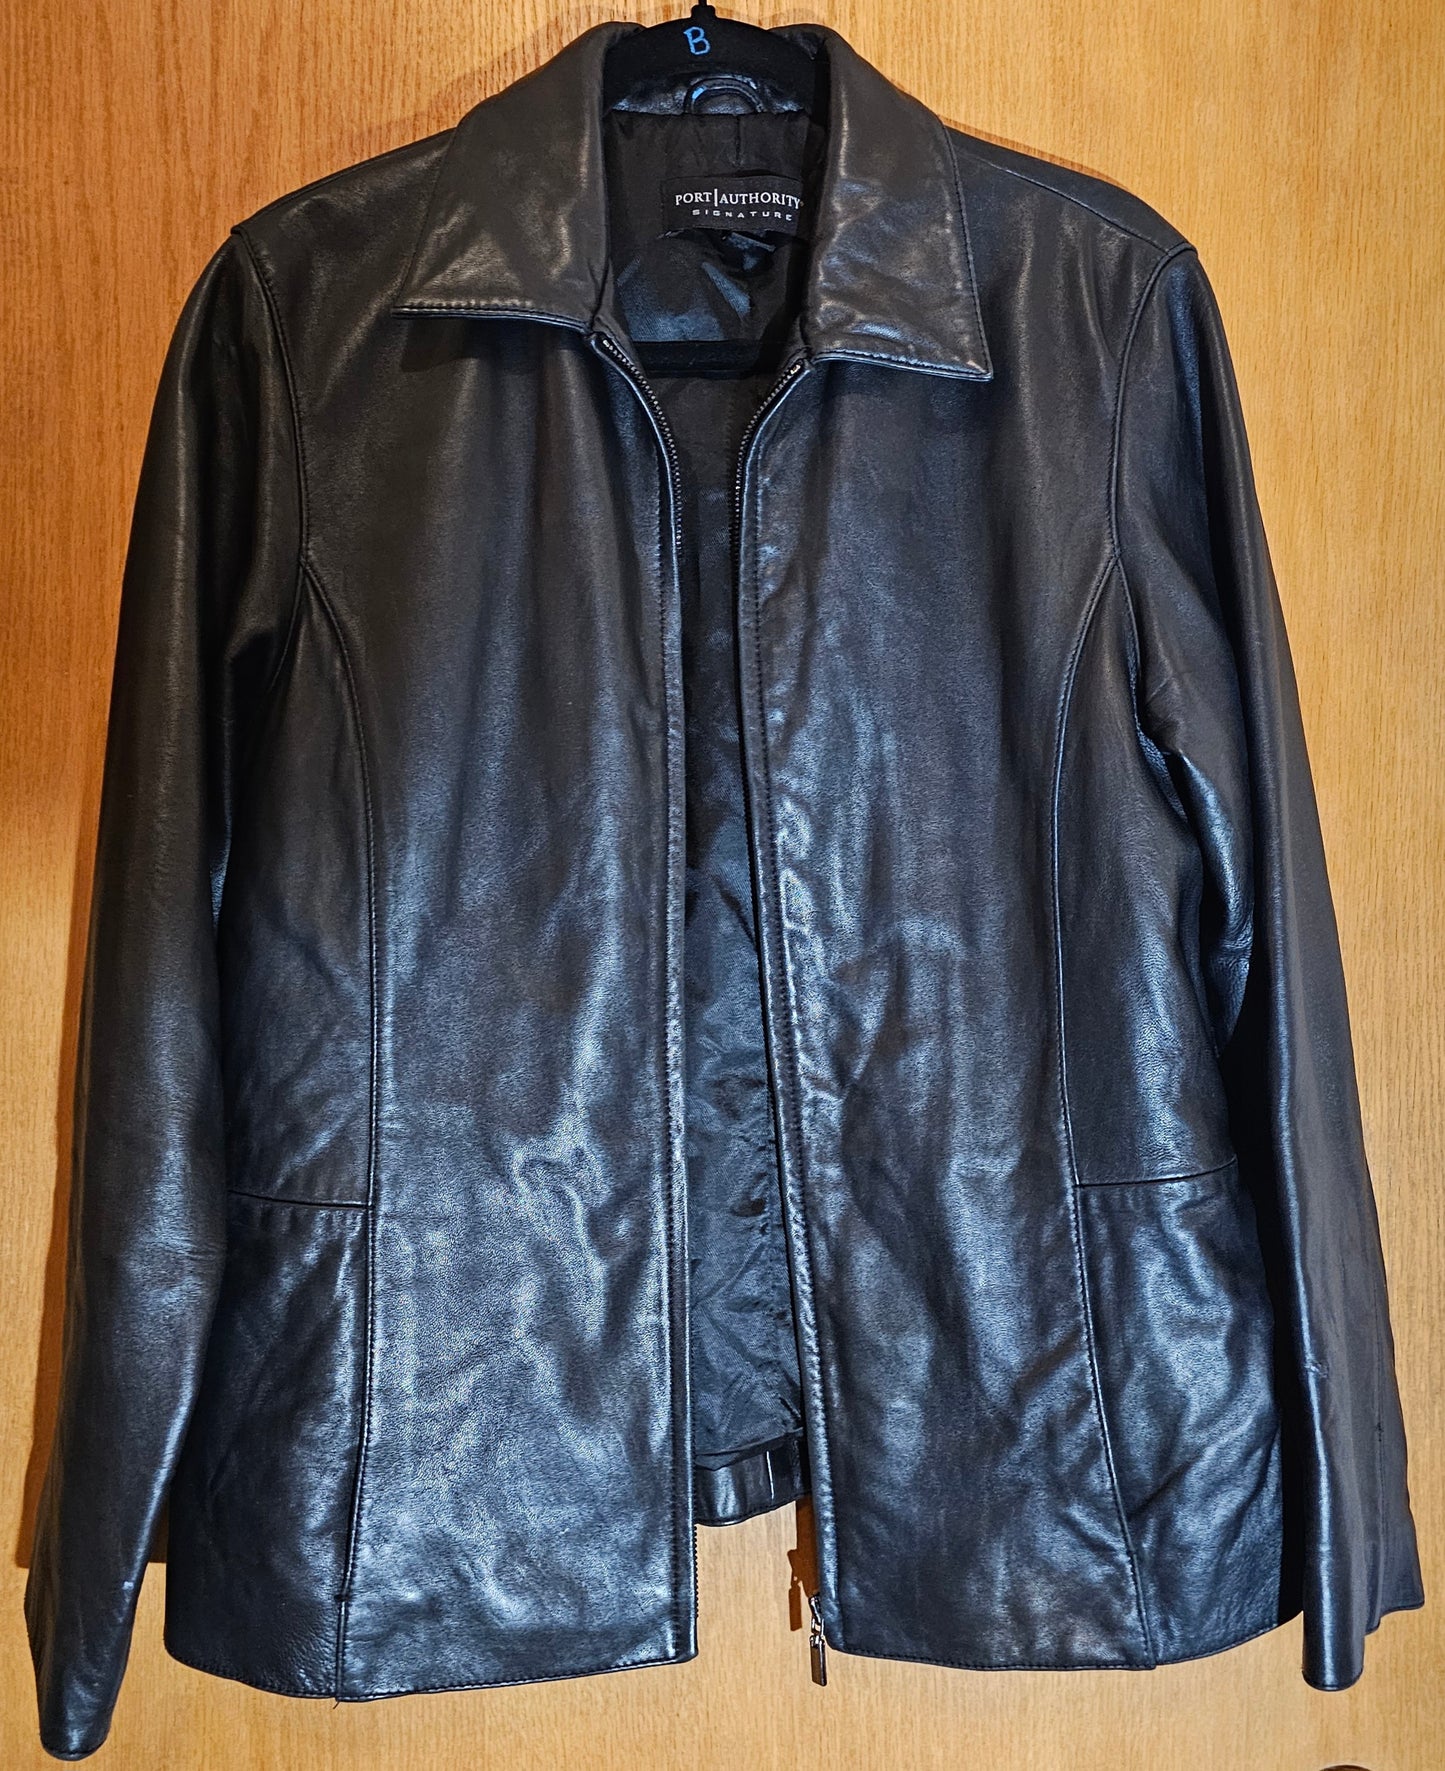 Vntg Portathority Blk Soft Leather Jacket